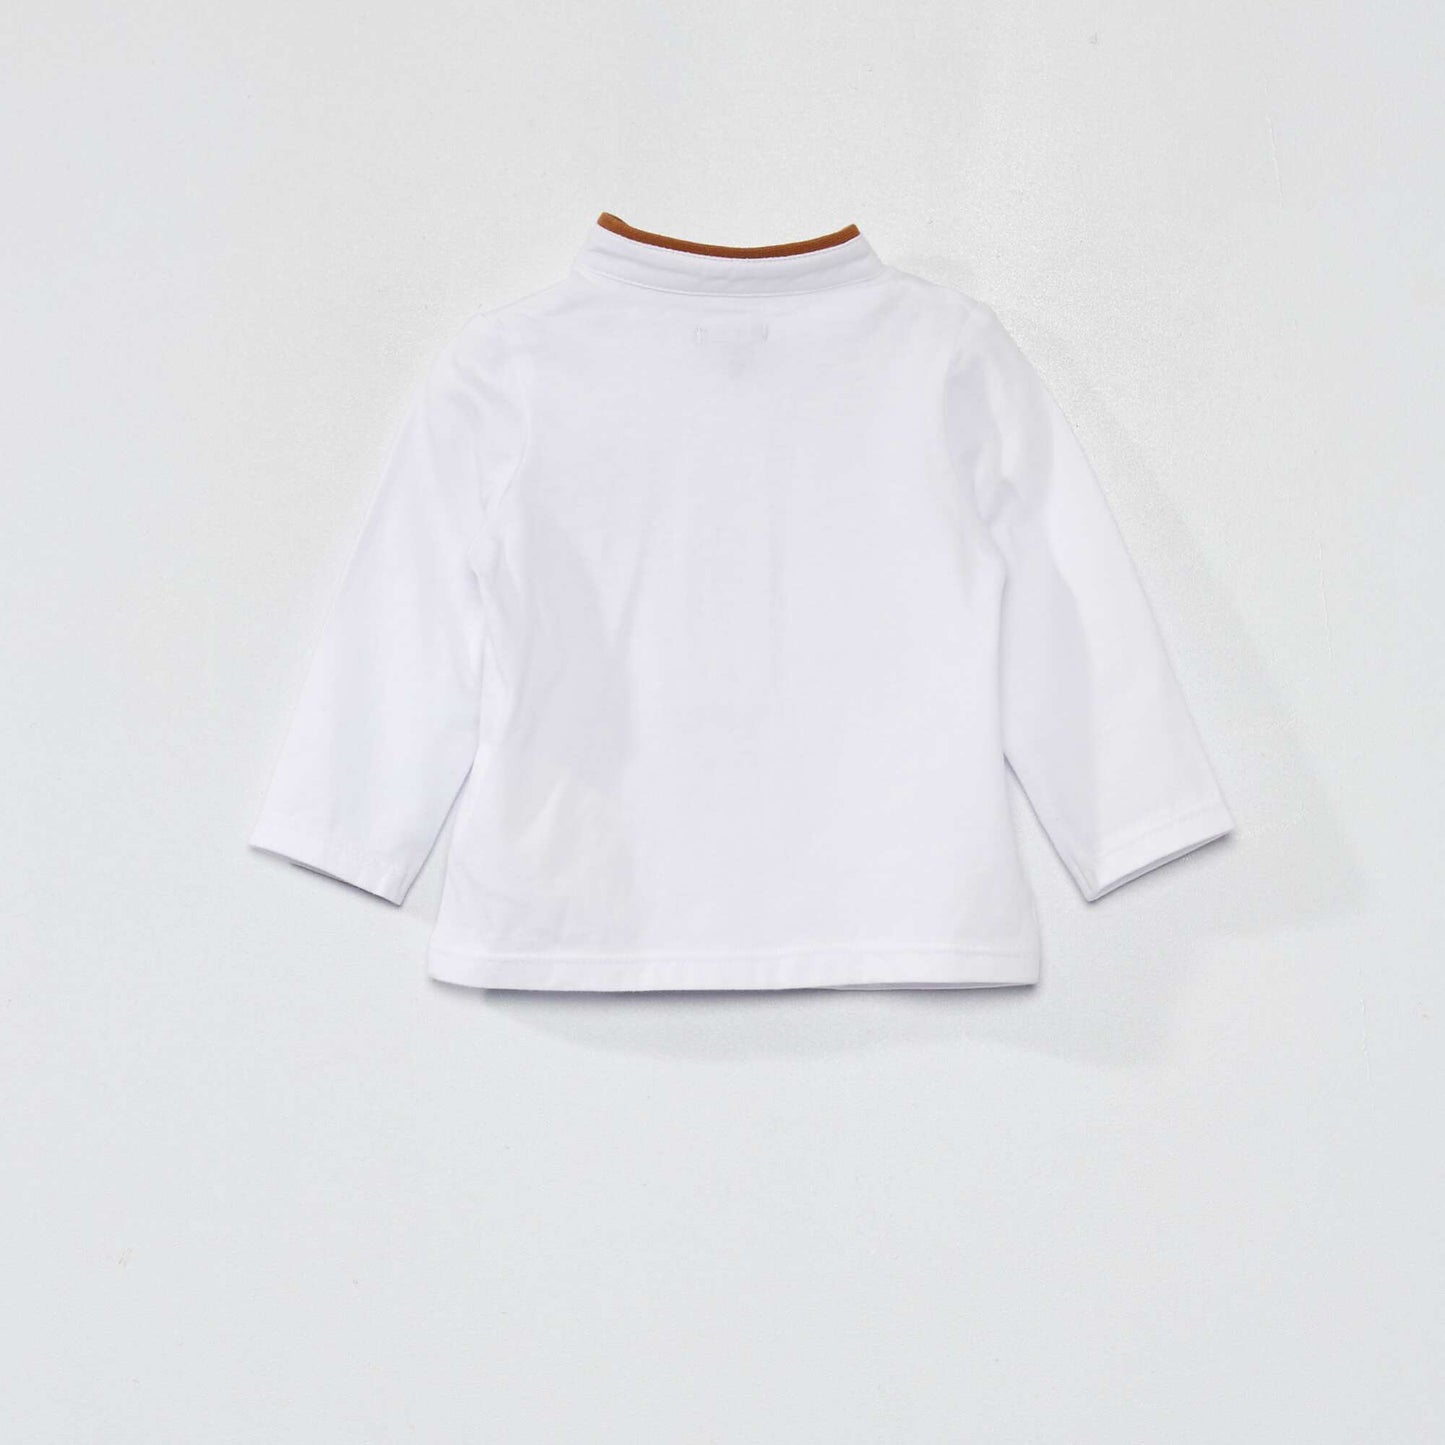 Ensemble - salopette + t-shirt Marron/blanc